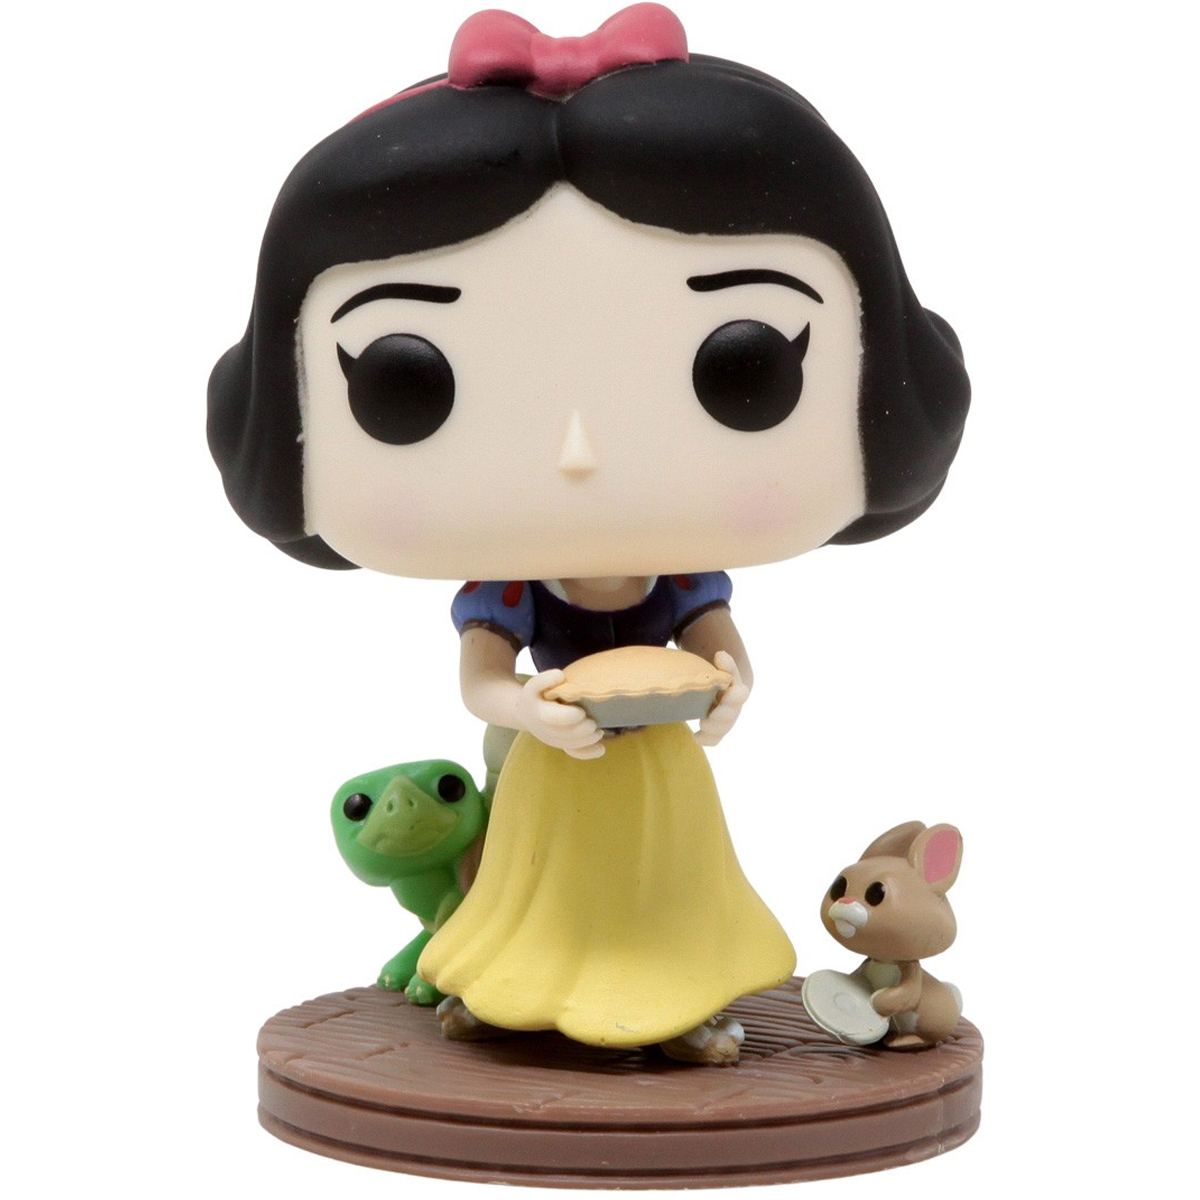 Snow White #1019 - Princess - Funko Pop! Disney